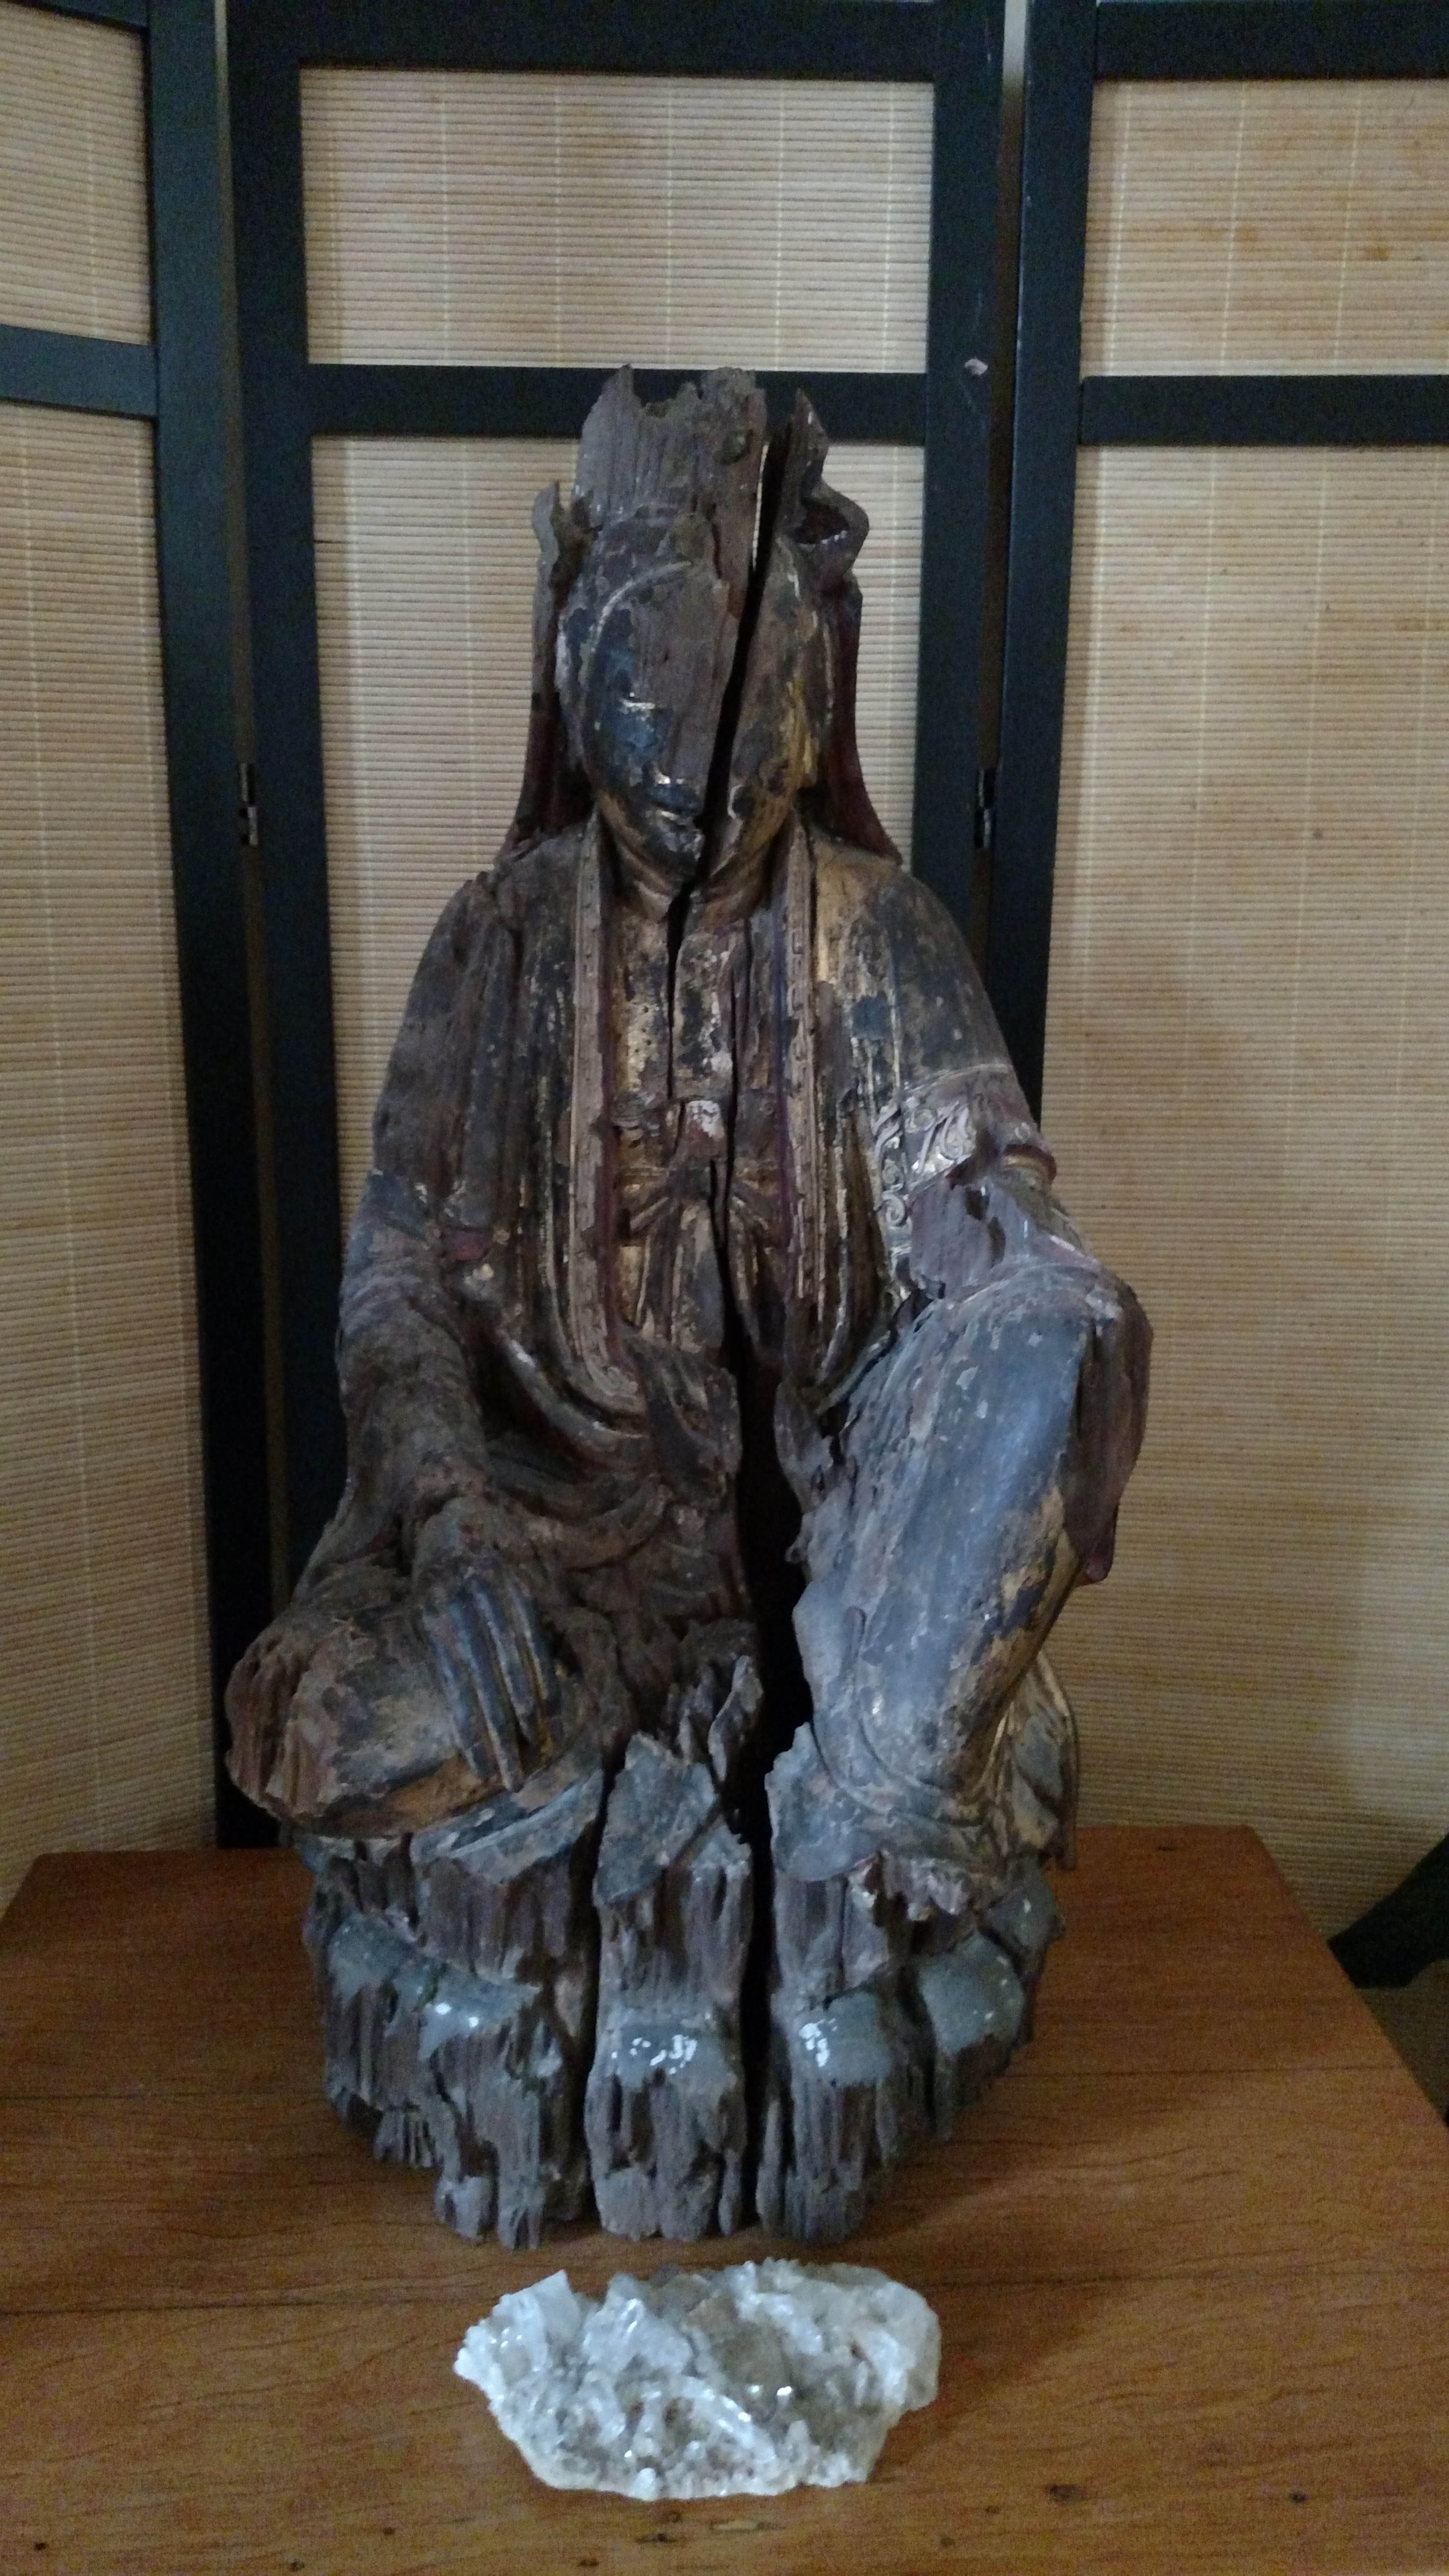 my favorite statue at IMS -- Decaying Kwan Yin